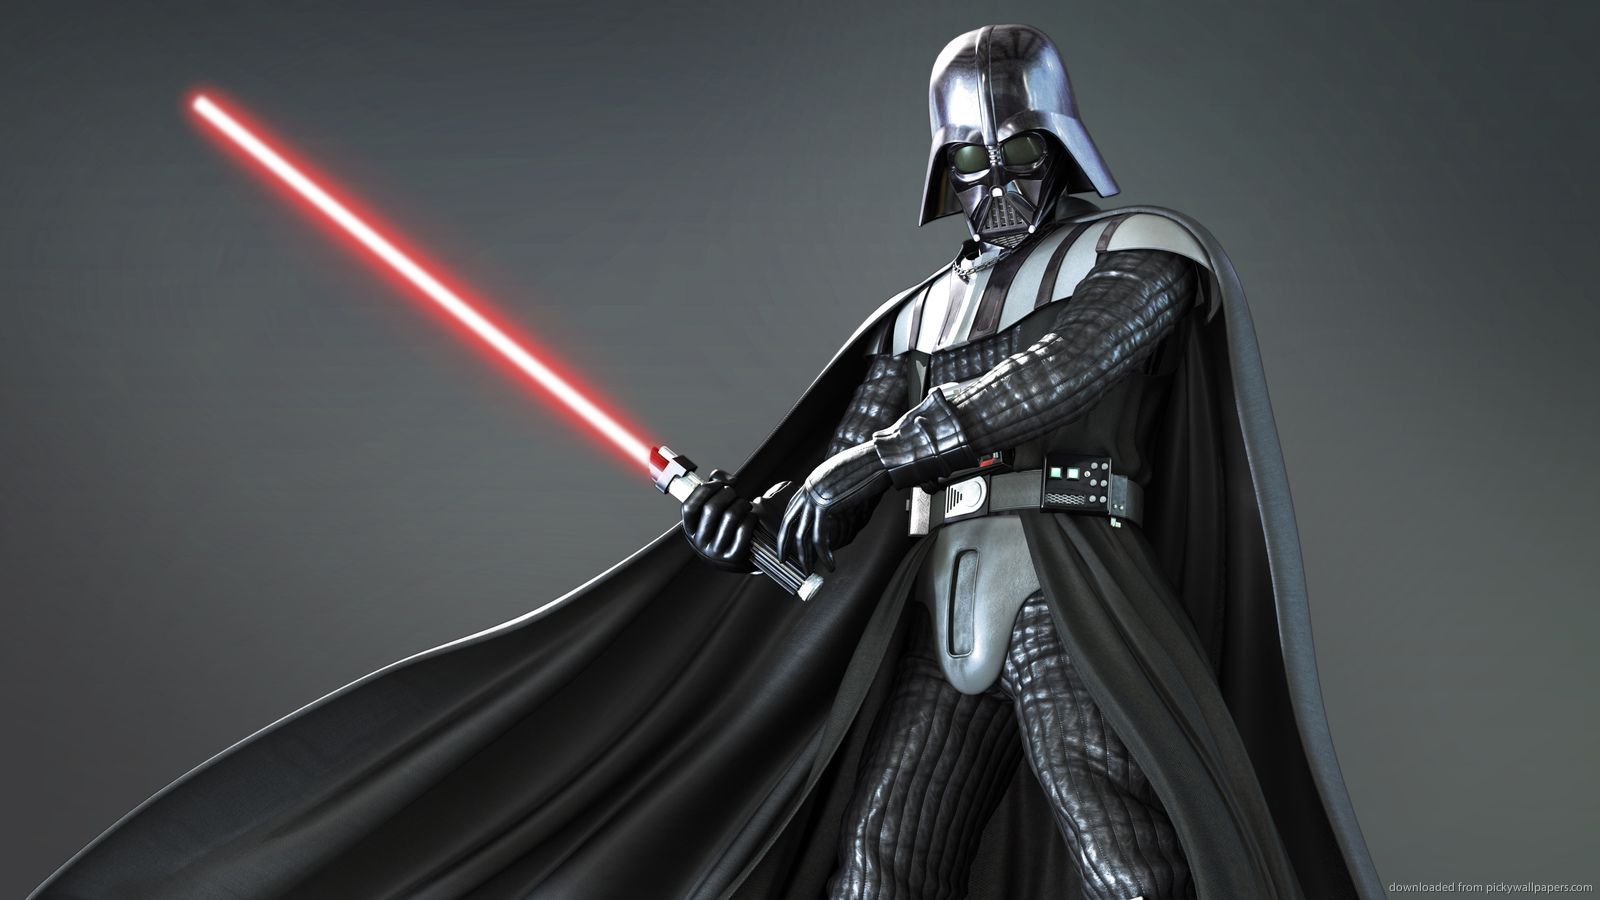 Download 1600x900 Darth Vader 3D Render Wallpaper